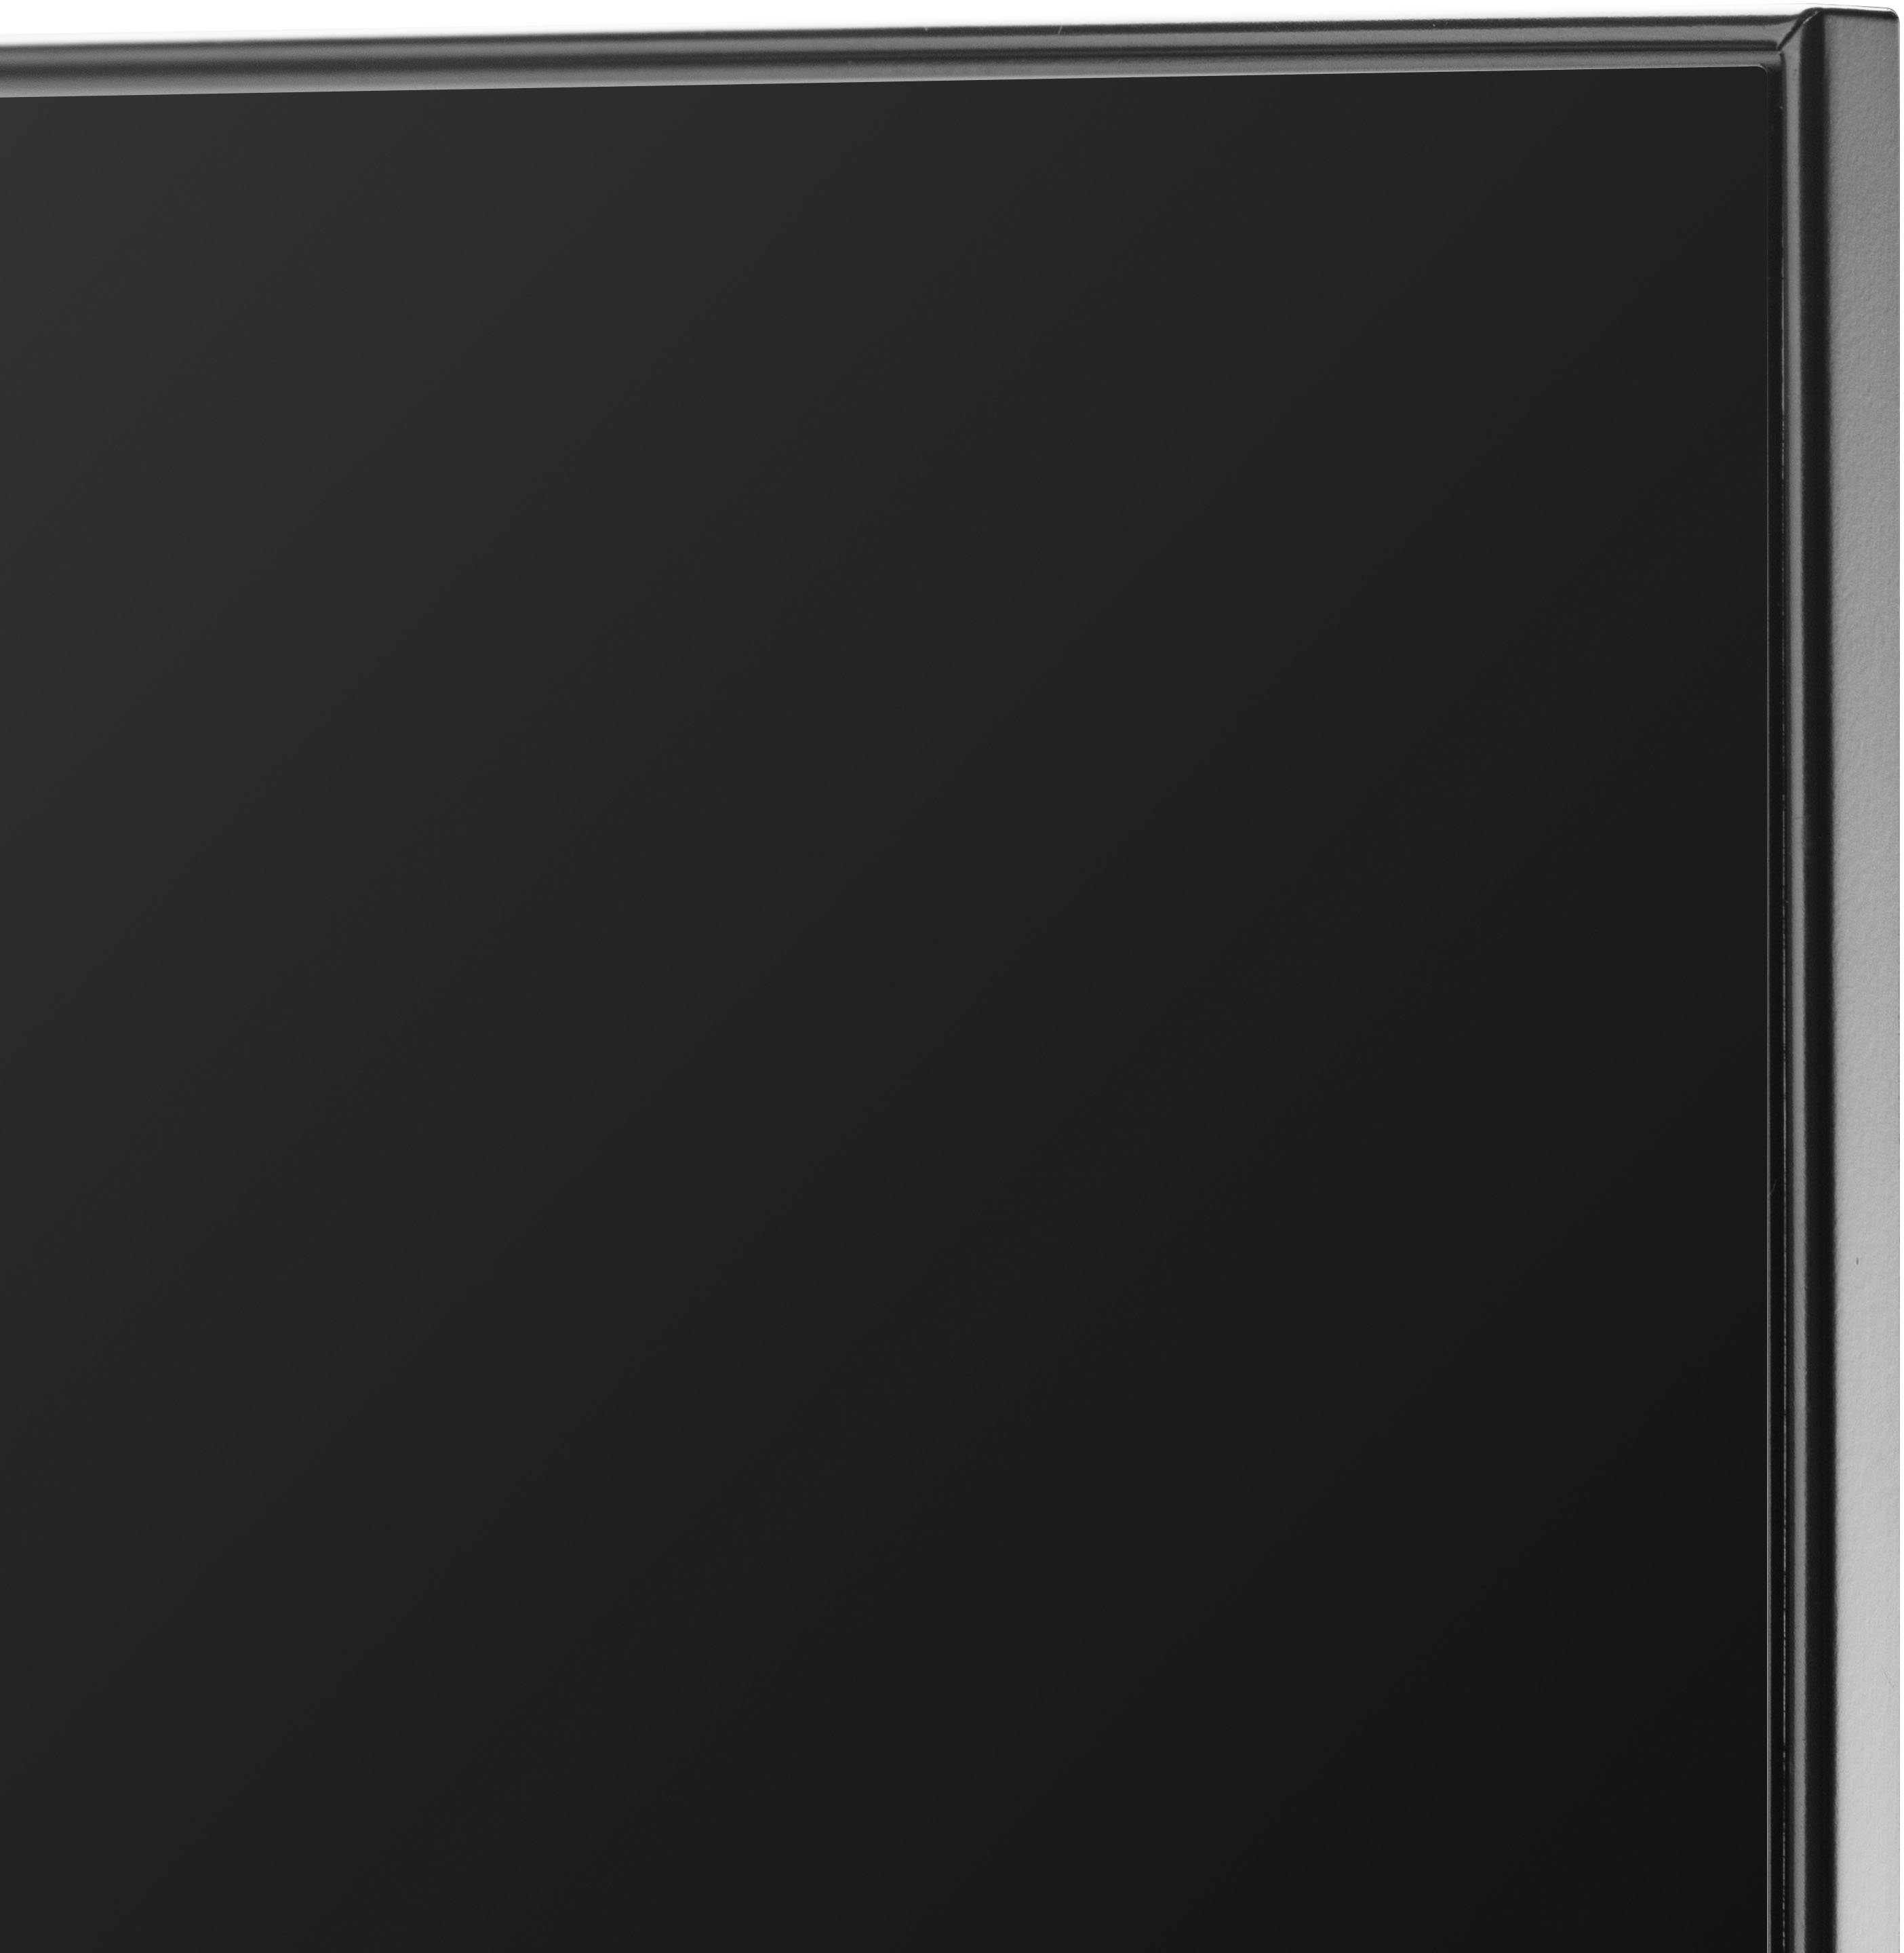  TCL Smart TV de 50 pulgadas Class 5-Series 4K QLED Dolby Vision  HDR con Google TV - 50S546, modelo 2022, color negro